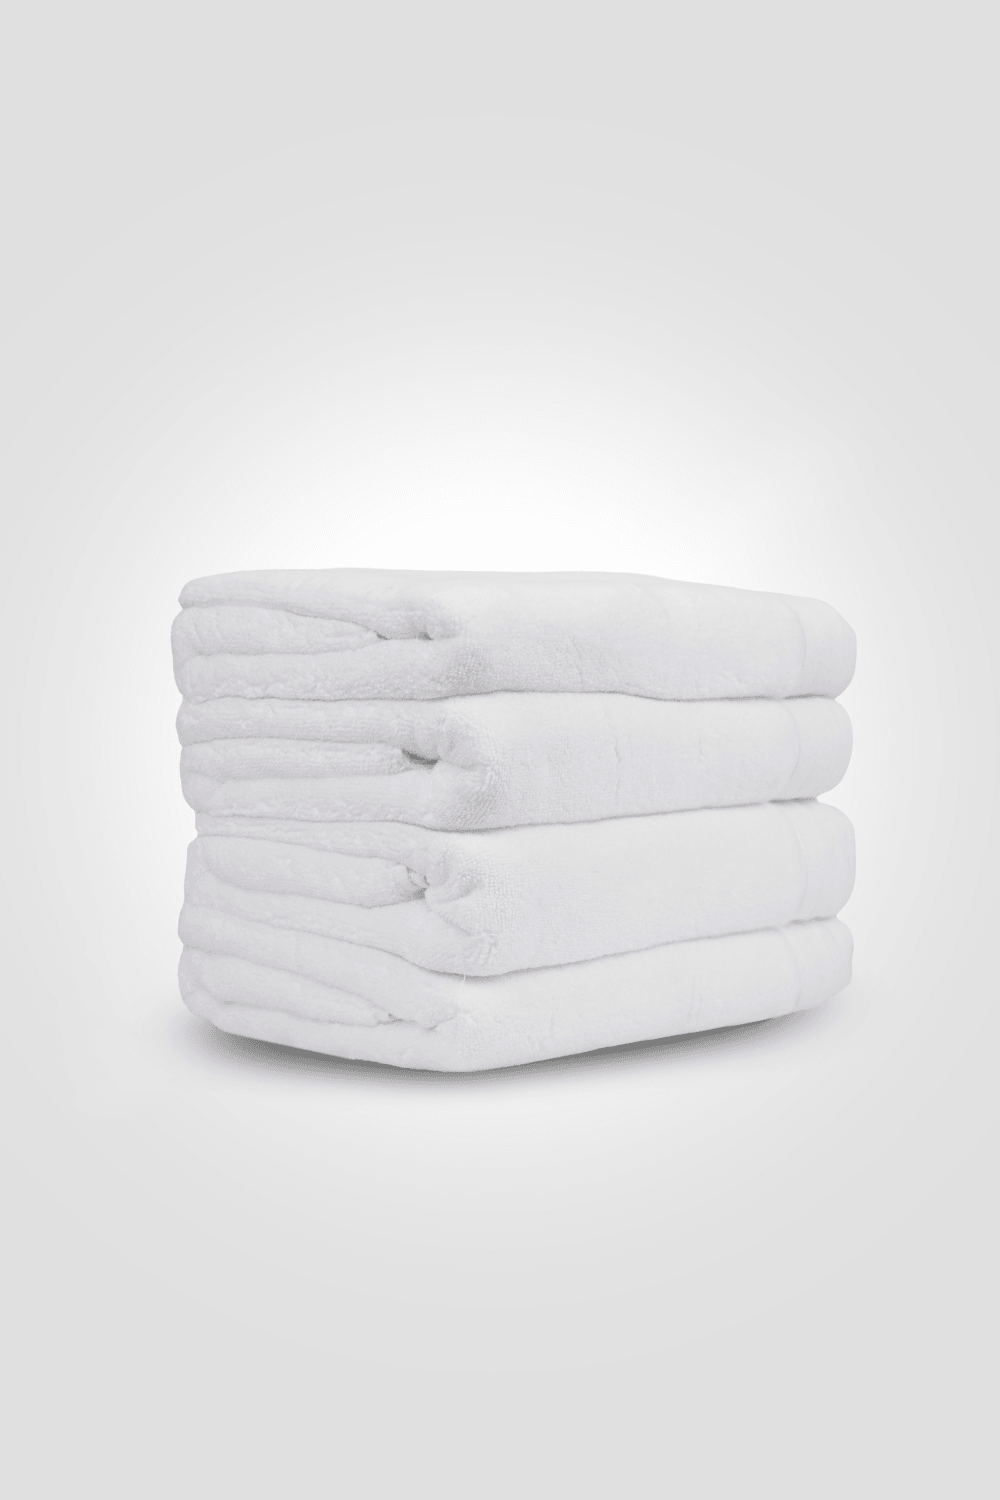 KENNETH COLE - סט 4 מגבות מפנקות בצבע לבן - MASHBIR//365